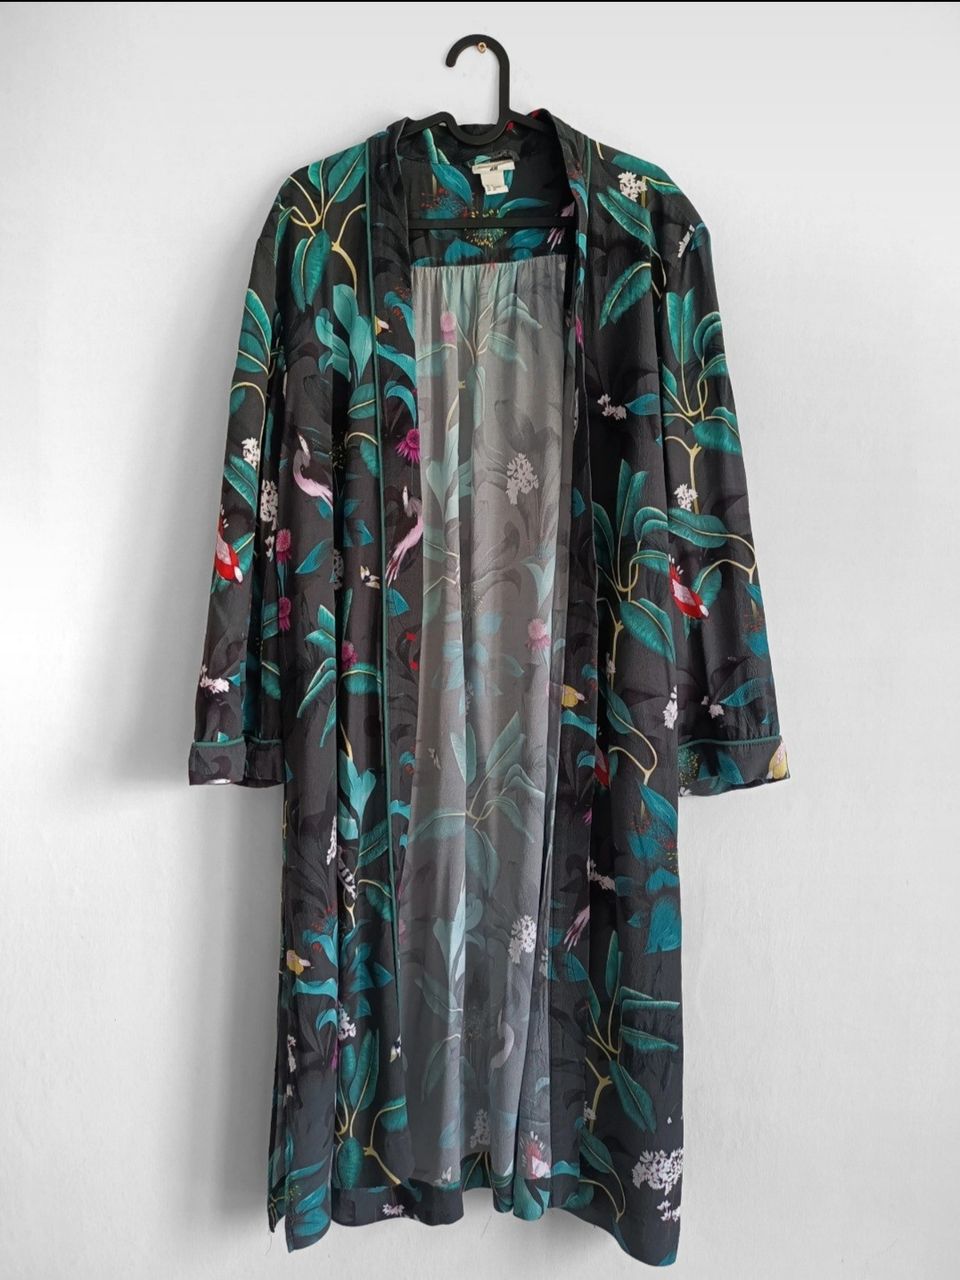 H&M by Anna Glover (kimono/jakku)